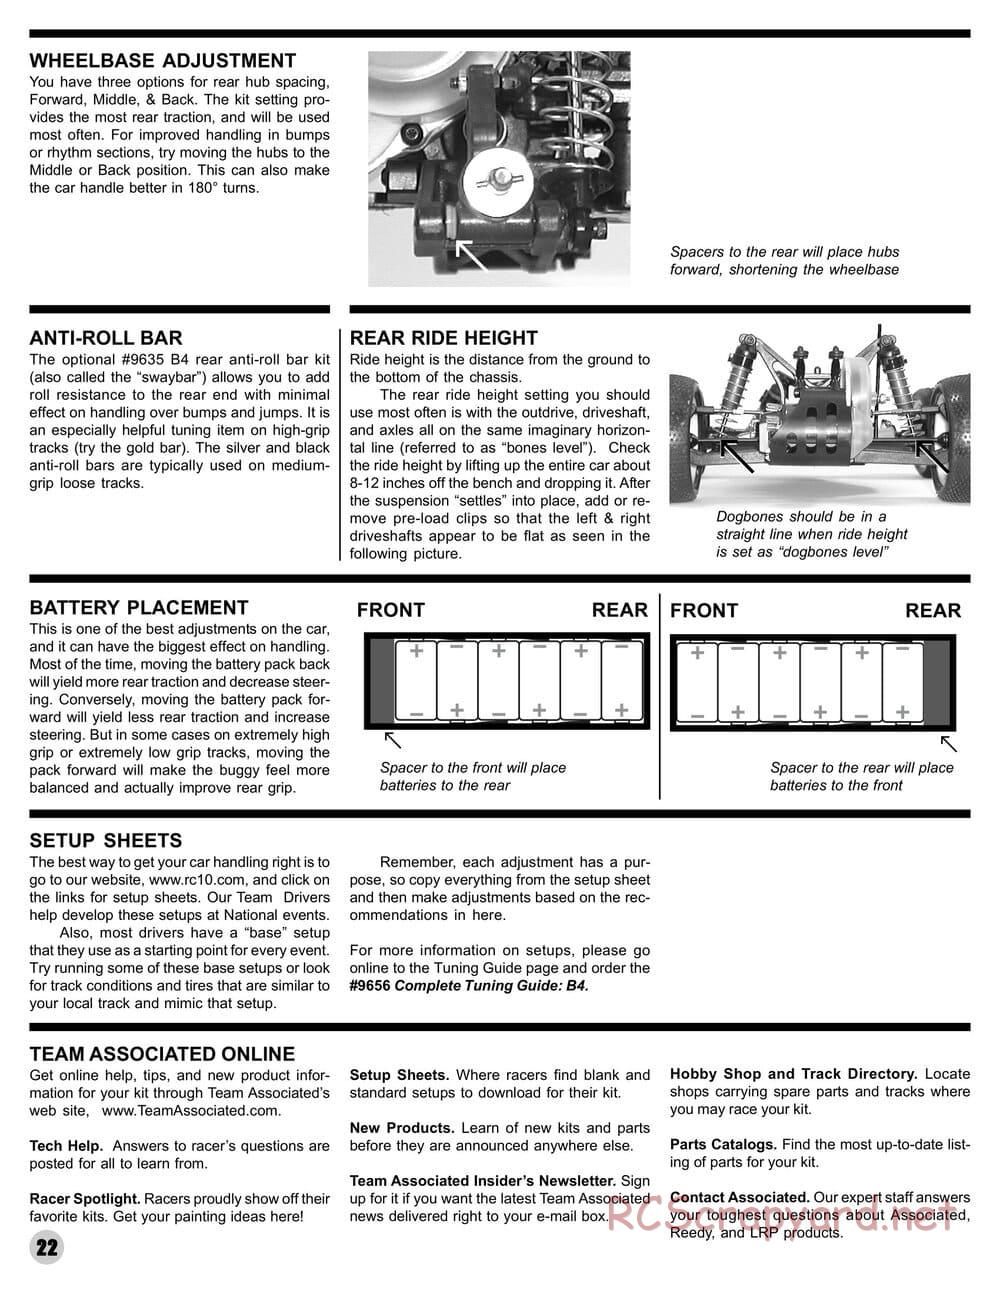 Team Associated - RC10 B4 Team - Manual - Page 21